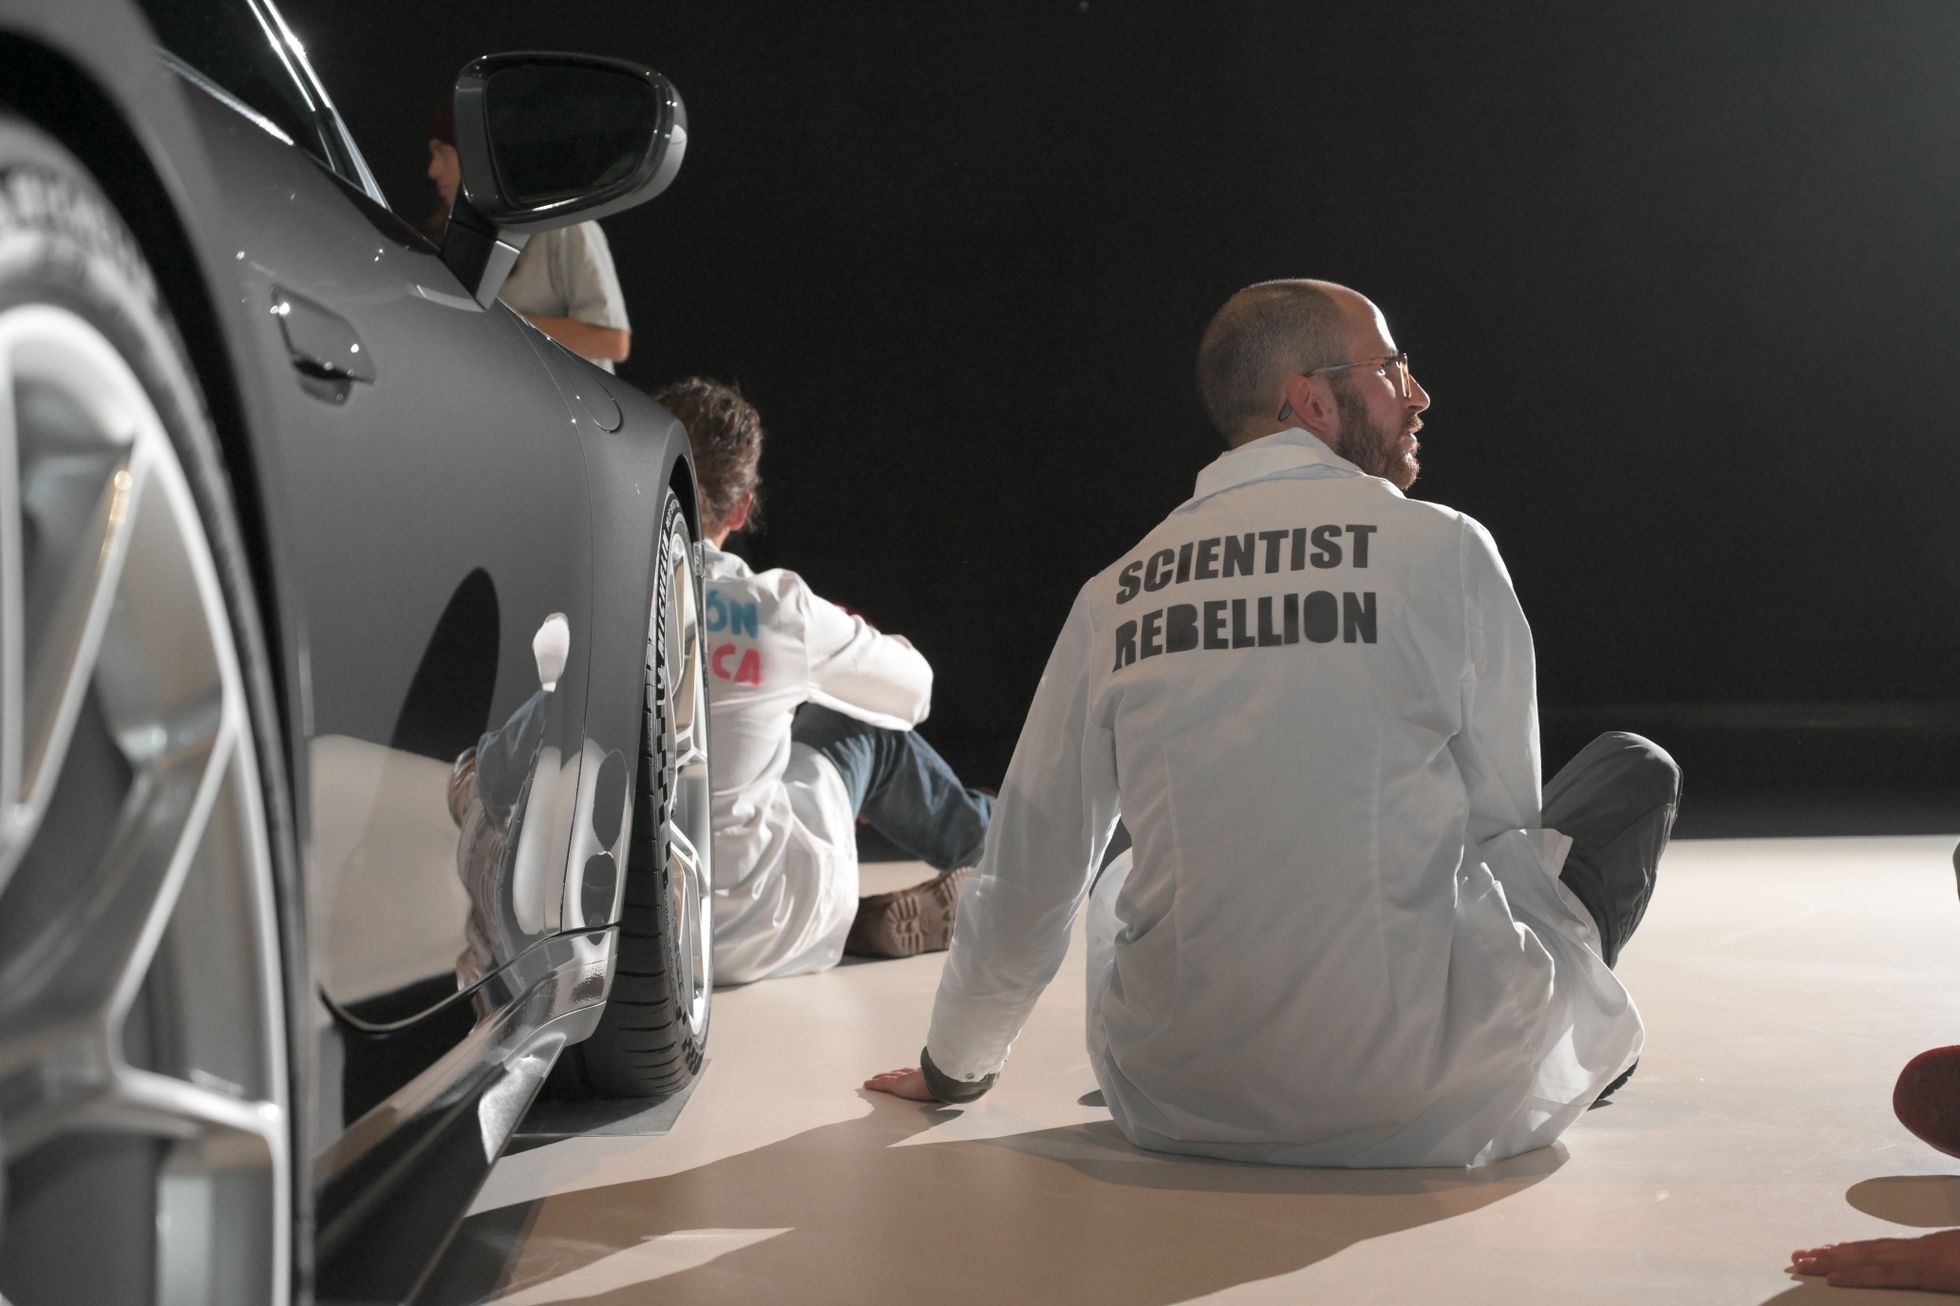 Scientist Rebellion Muzeum Autostadt říjen 2022